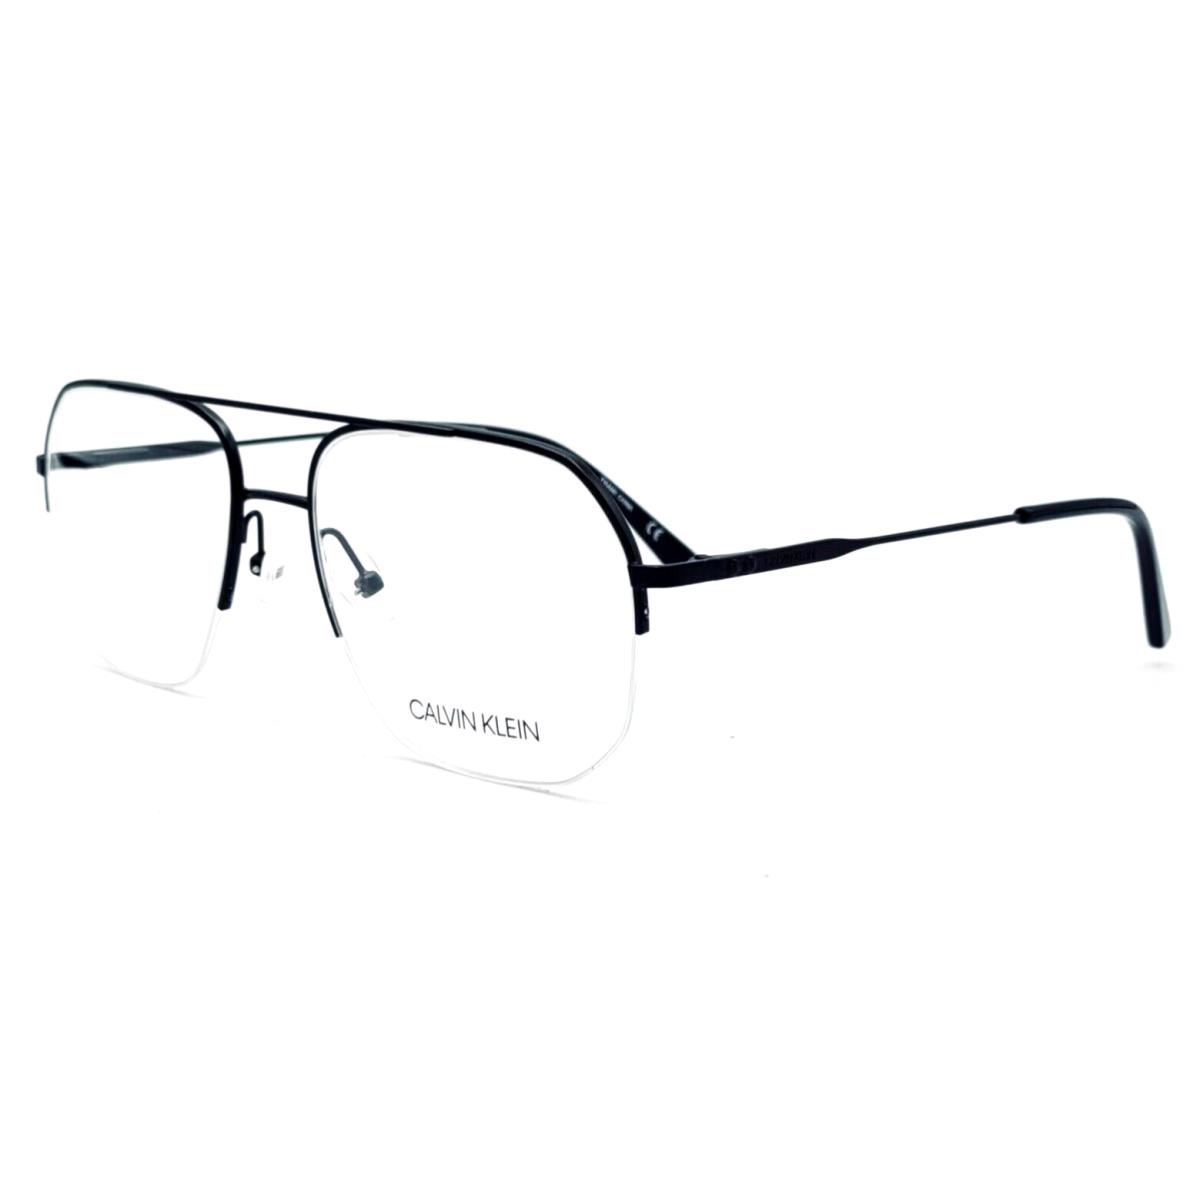 Calvin Klein - CK20111 001 55/17/145 - Black - Men Eyeglasses